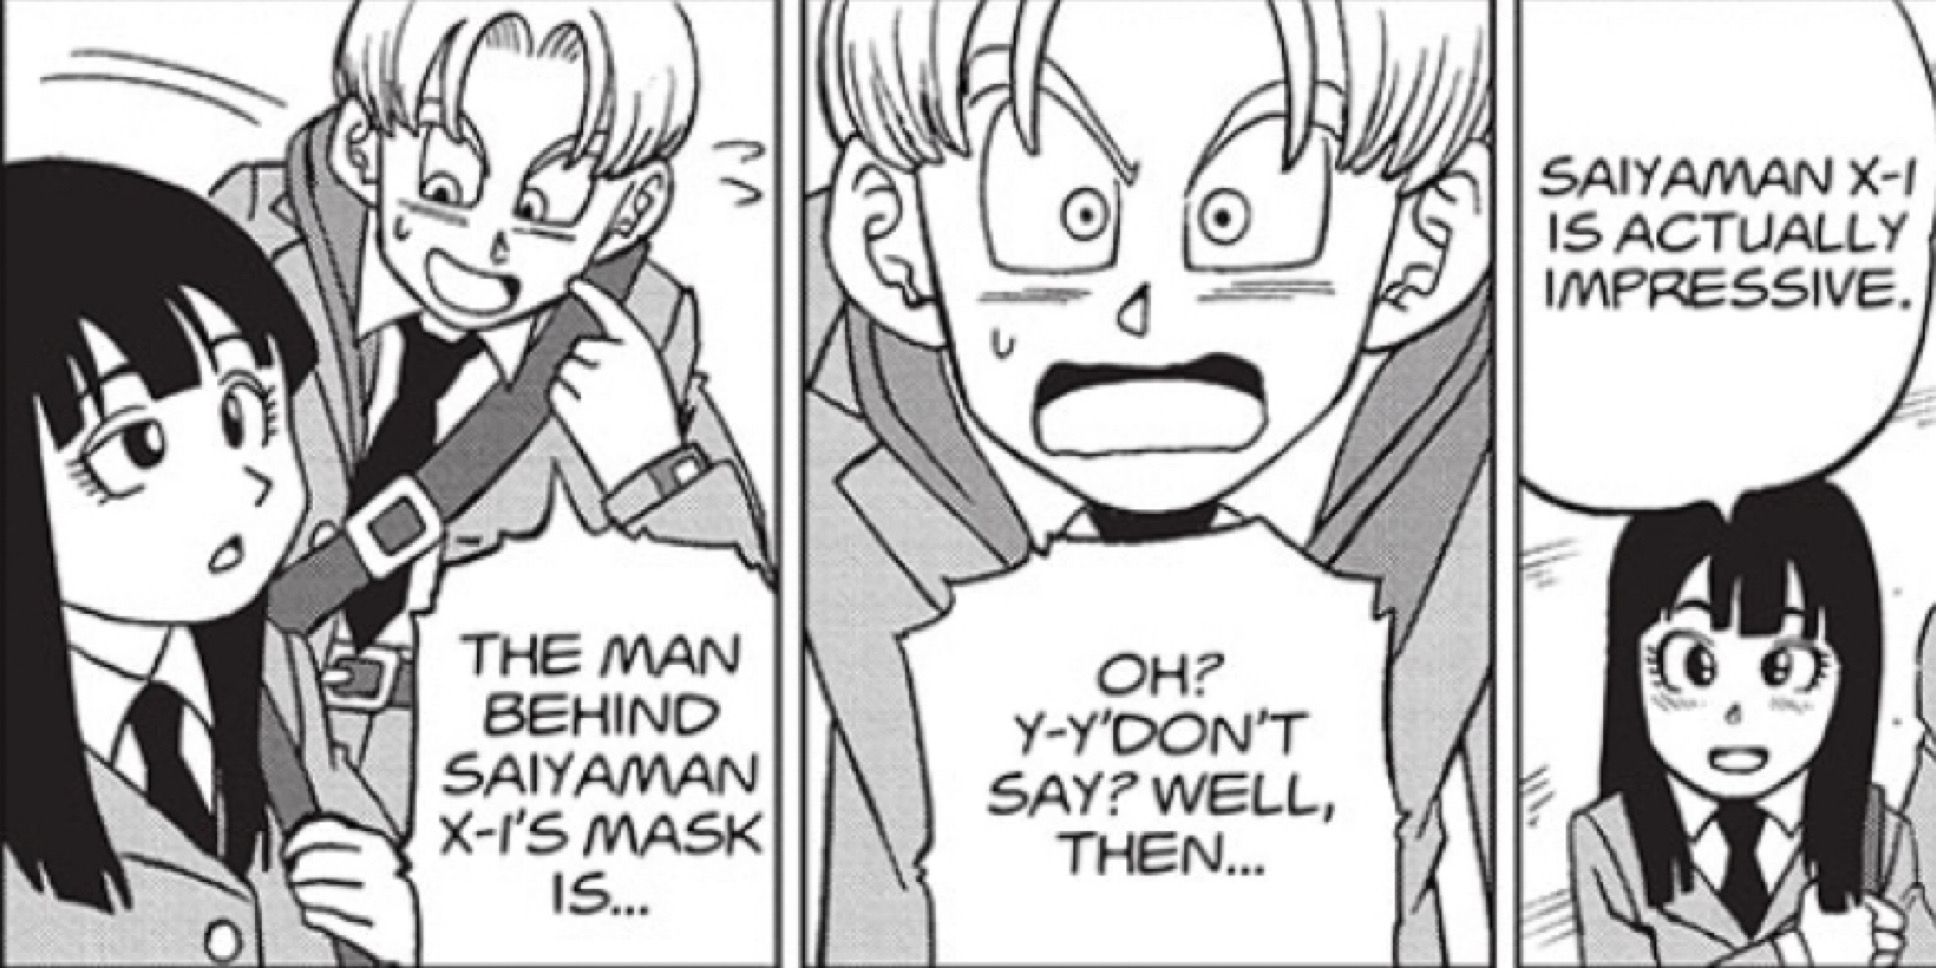 Mai impressed by Saiyaman X-1 in Dragon Ball Super manga Chapter 89.